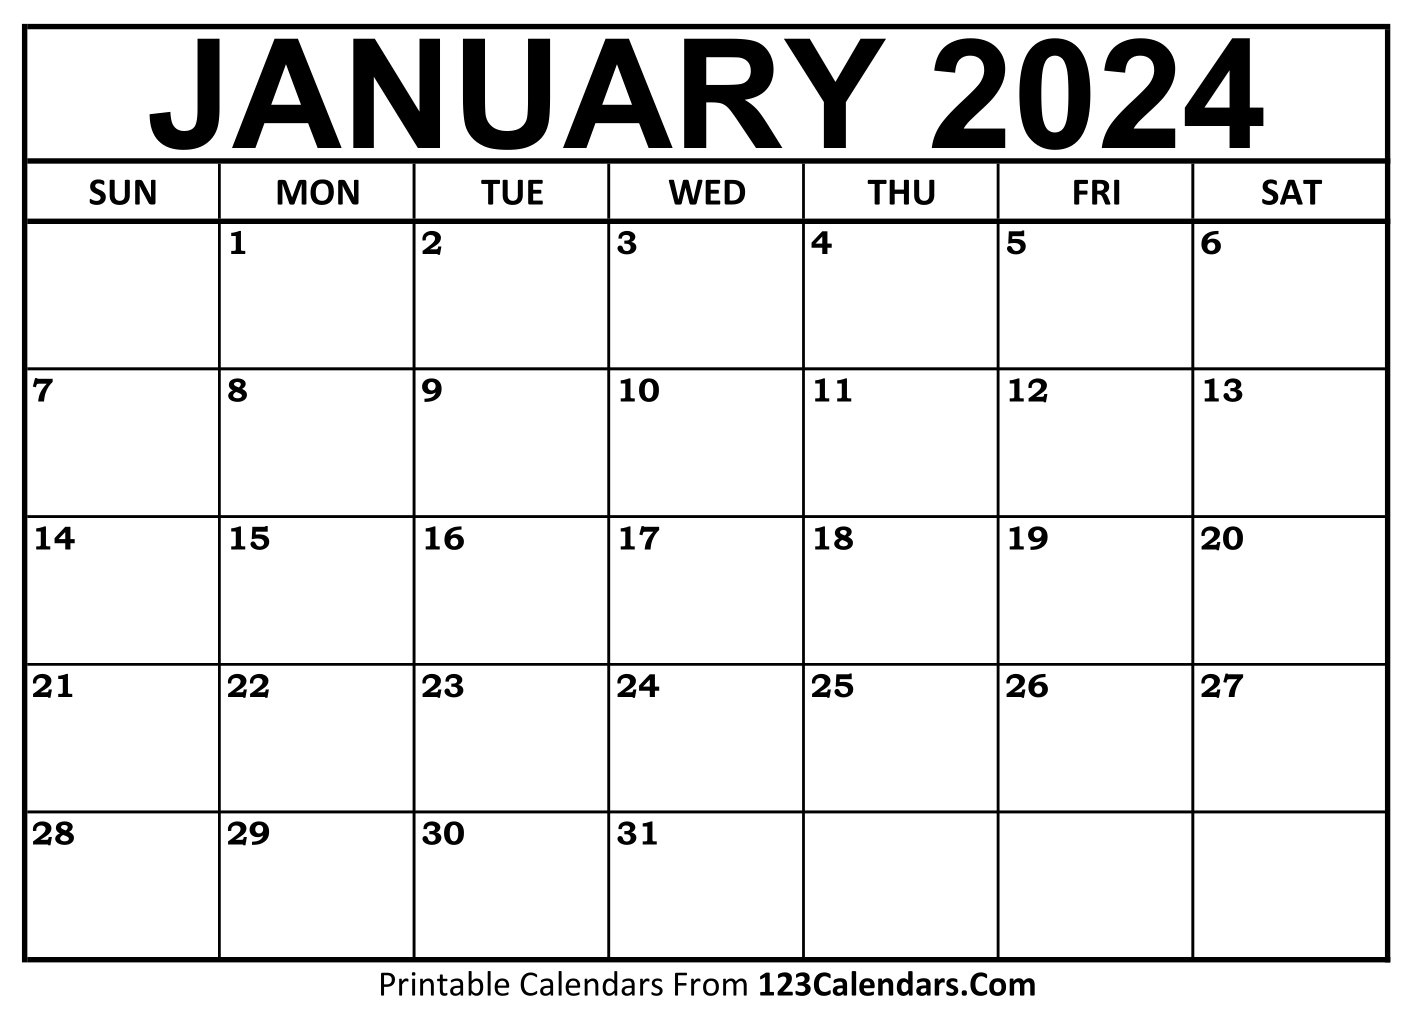 Printable January 2024 Calendar Templates - 123Calendars | Printable 2024 Calendar By Month